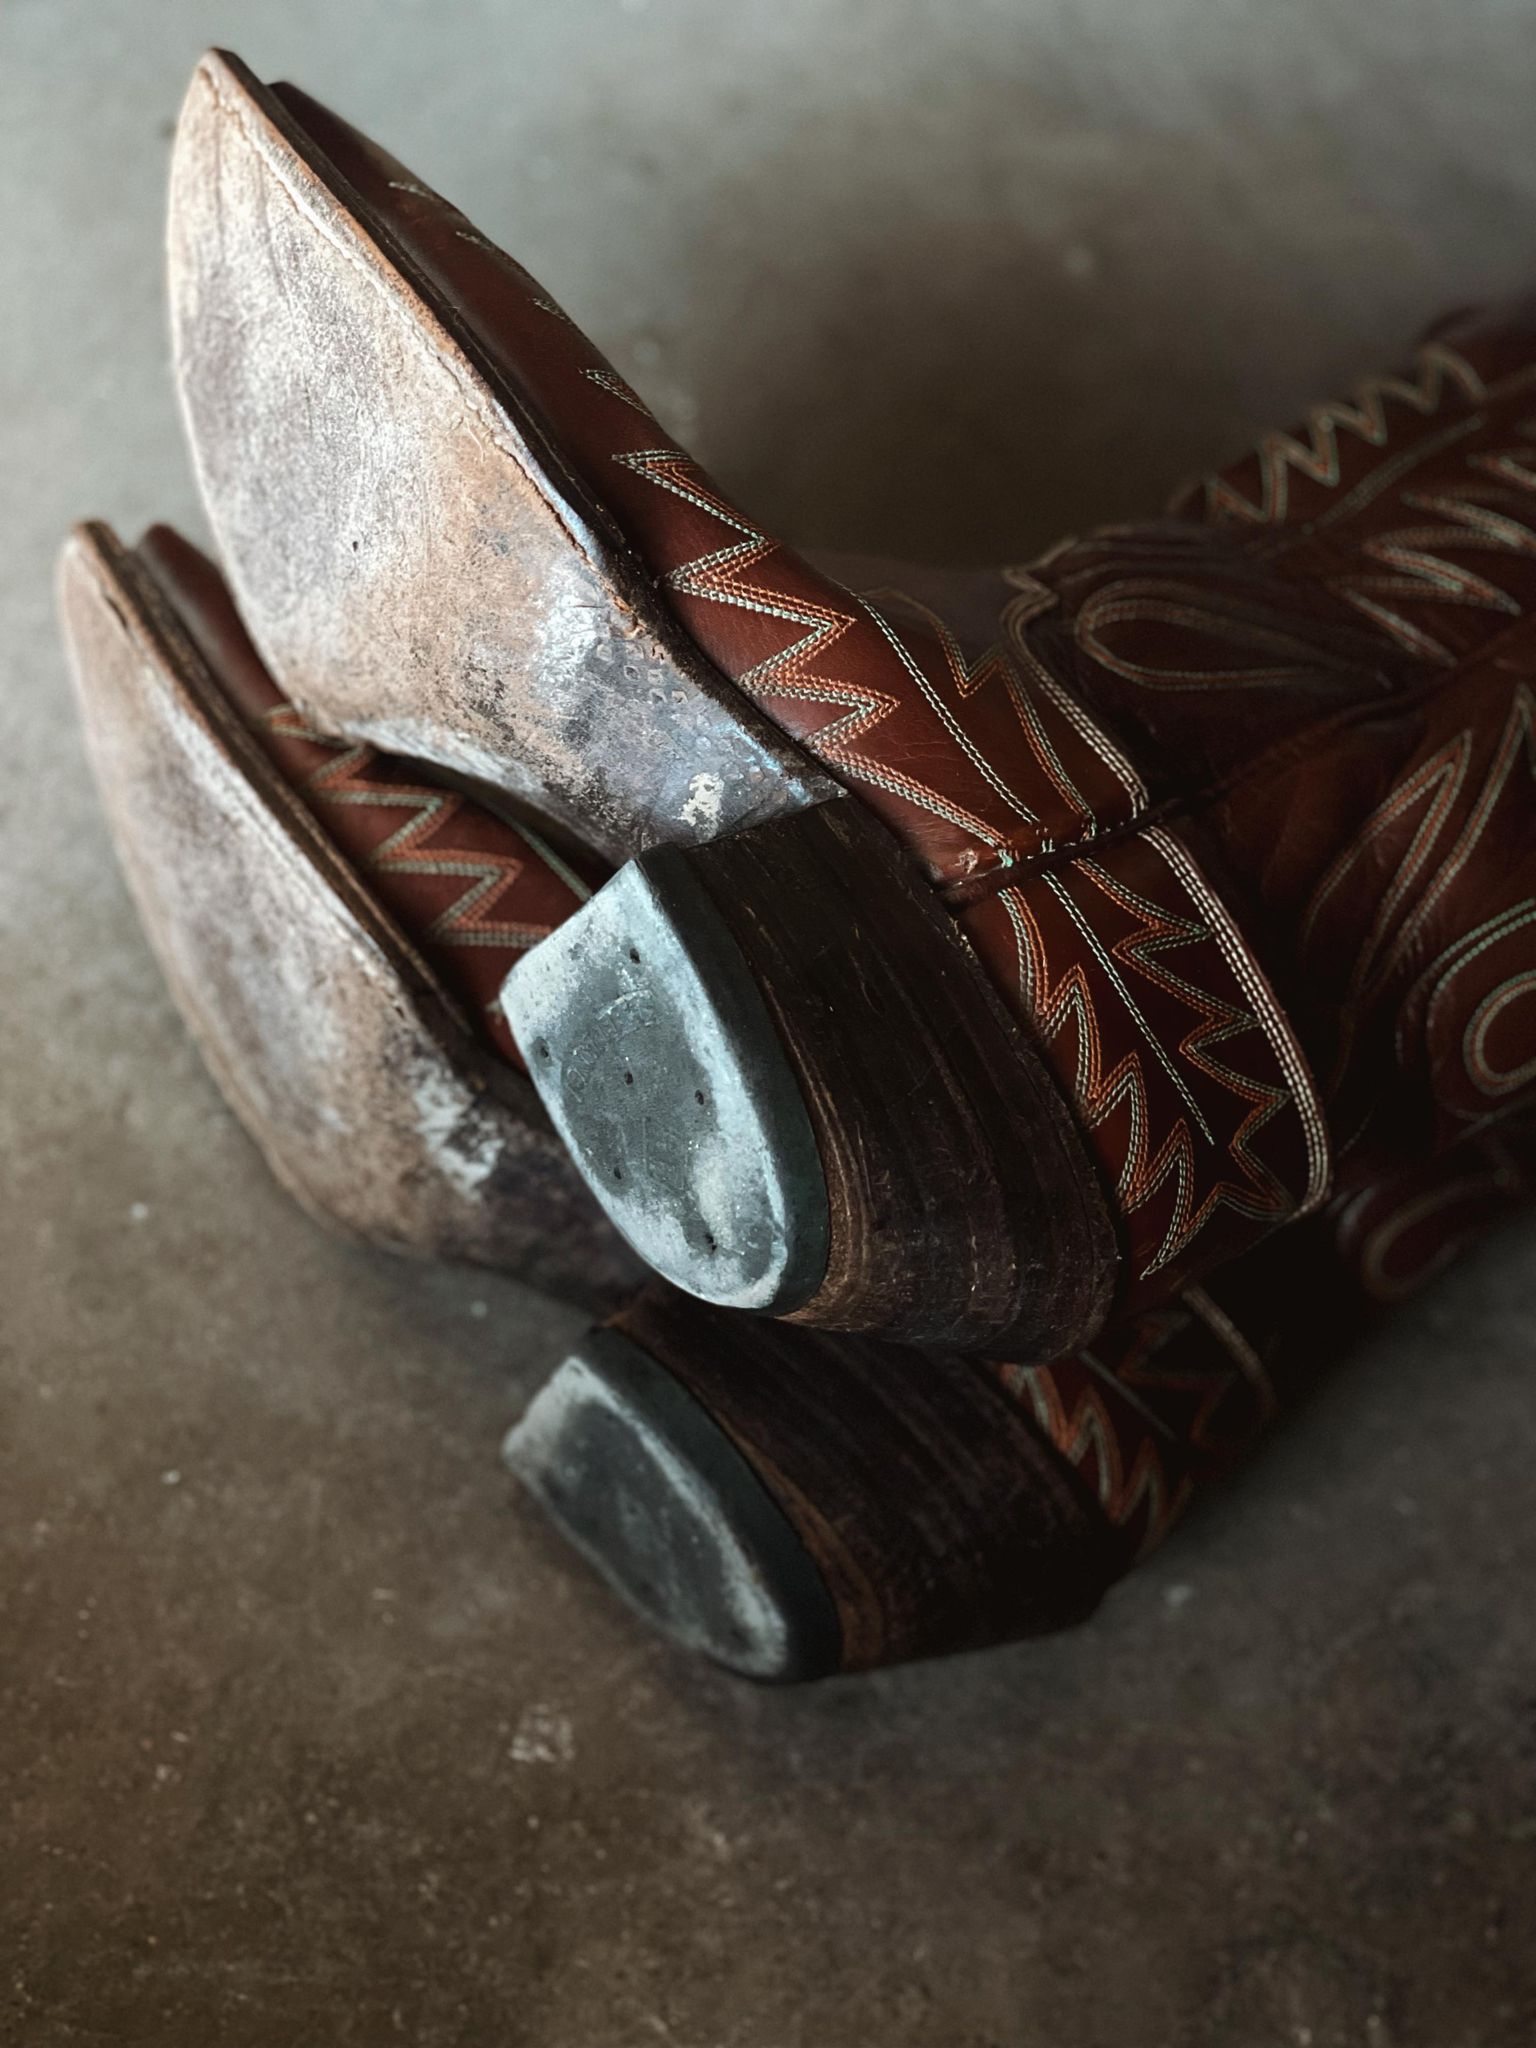 1950's Leddy's Cowboy Boots